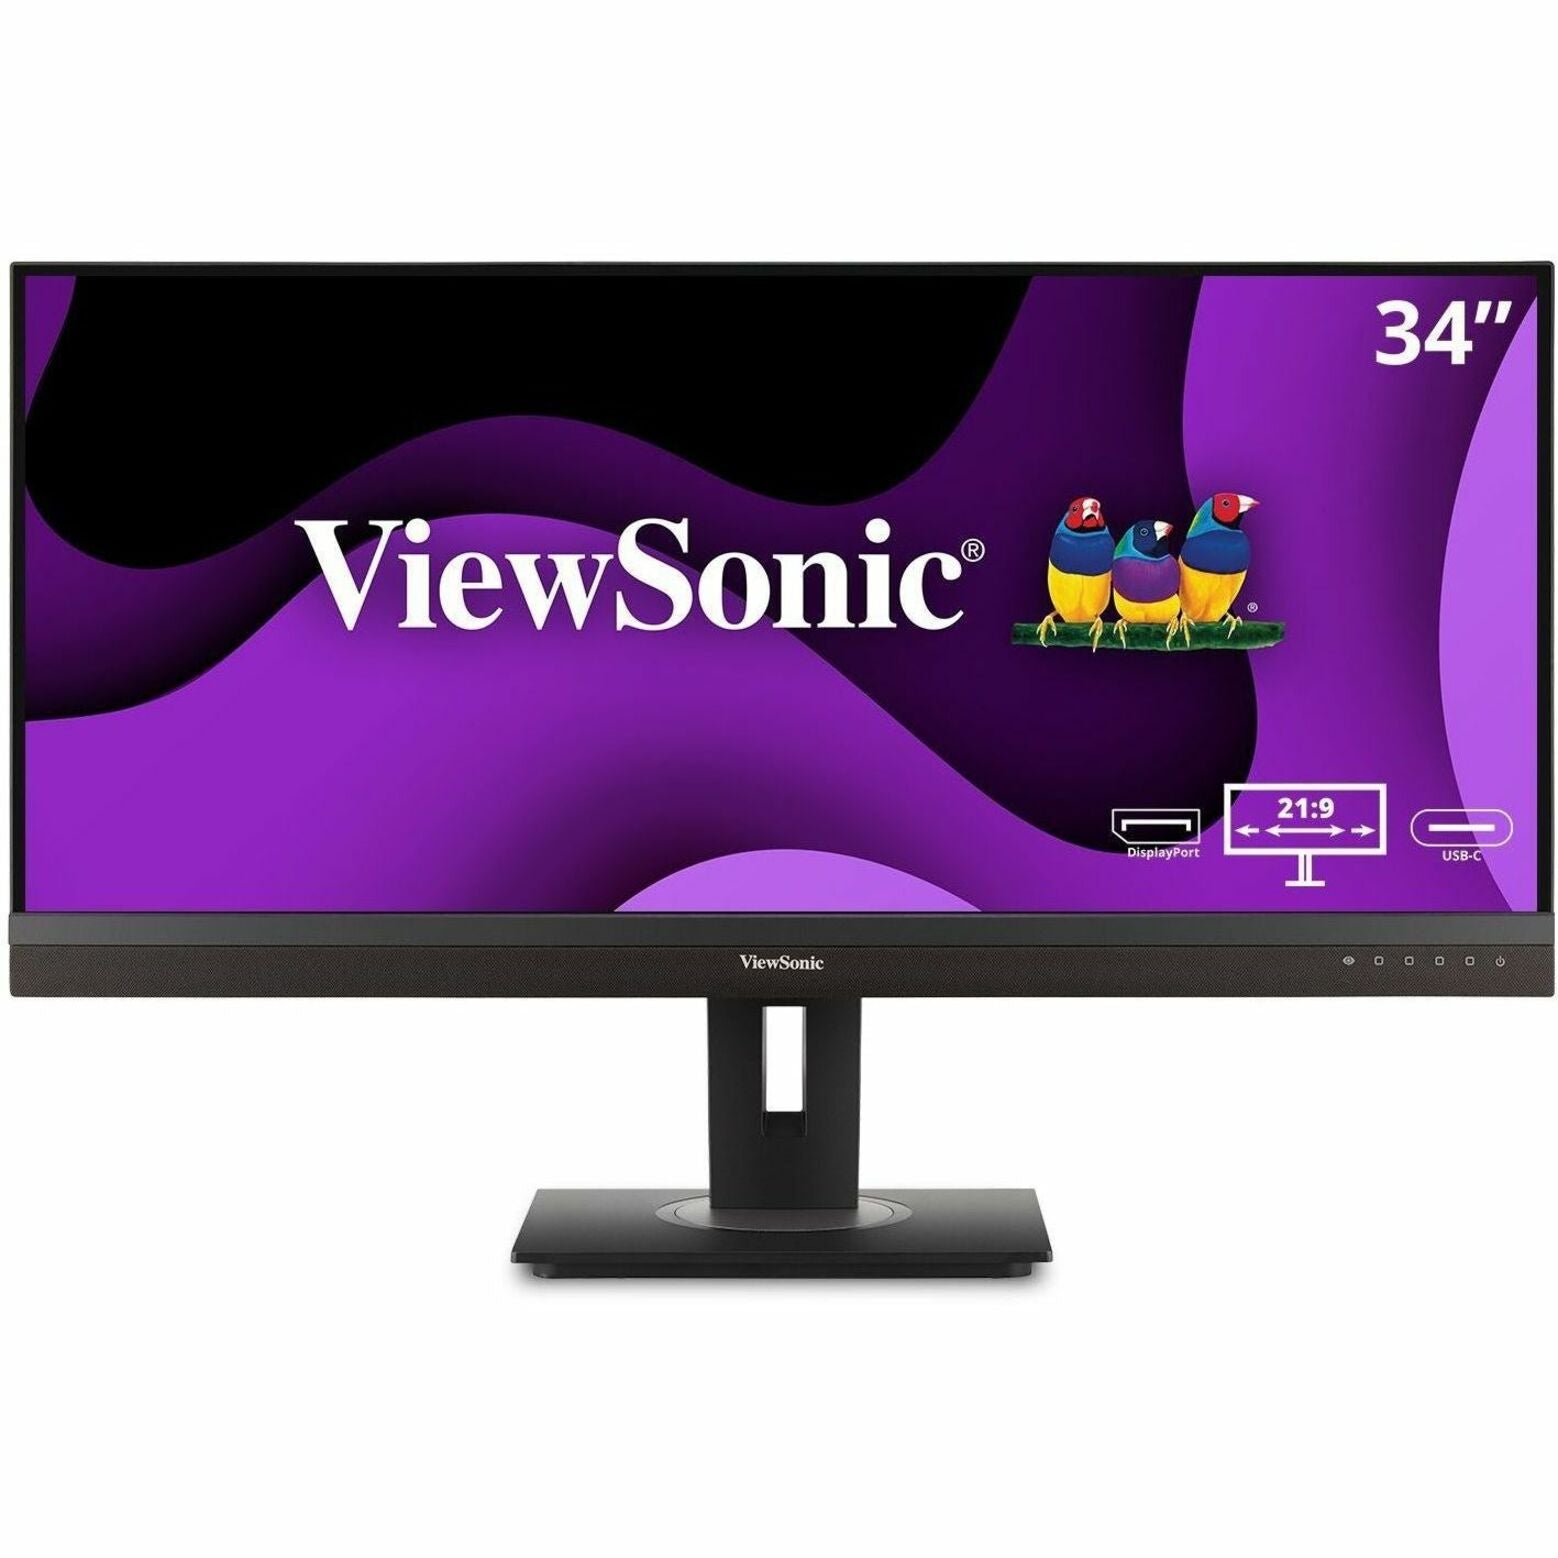 ViewSonic VG3456A 34" IPS LCD WQHD Monitor (HDMI DP and USB-C) 300 Nit Brightness 16.7 Million Colors 